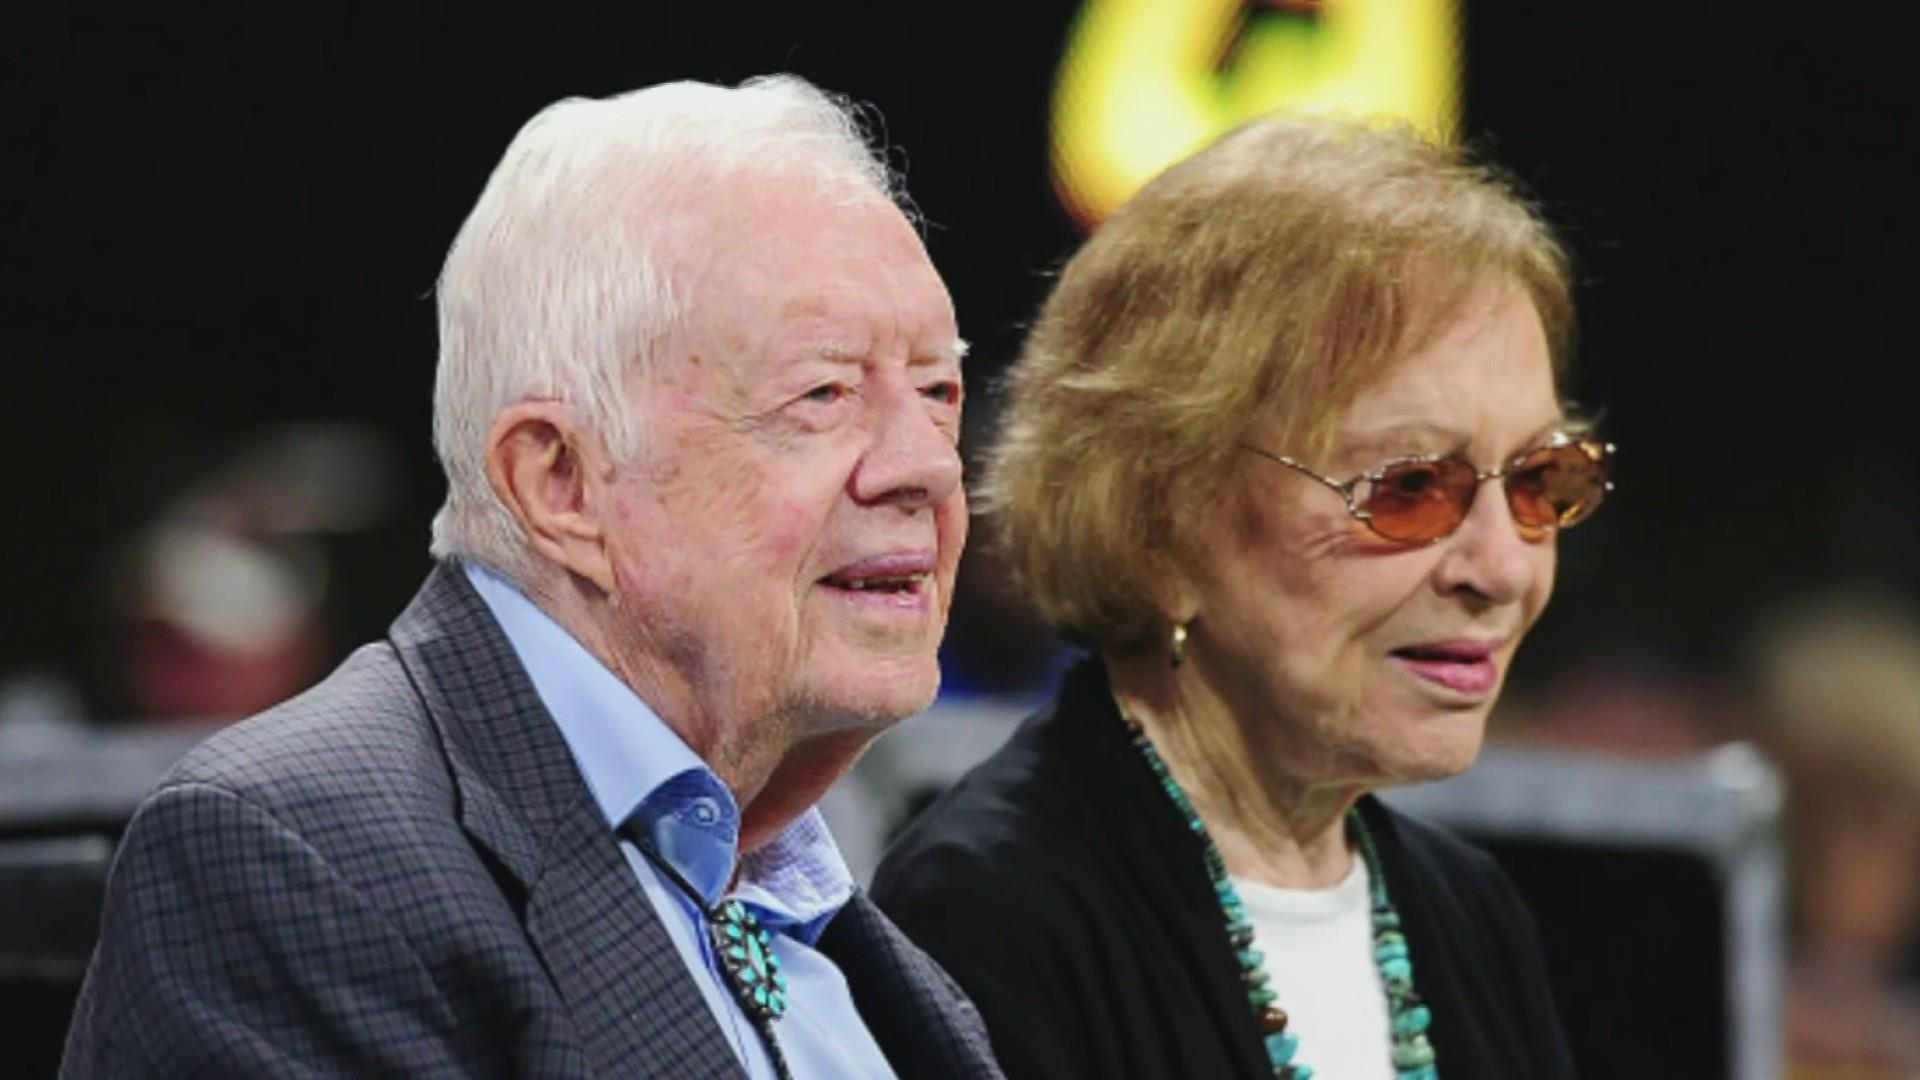 Watch President Jimmy Carter and Rosalynn Carter's tribute to Joe Biden at the 2020 DNC